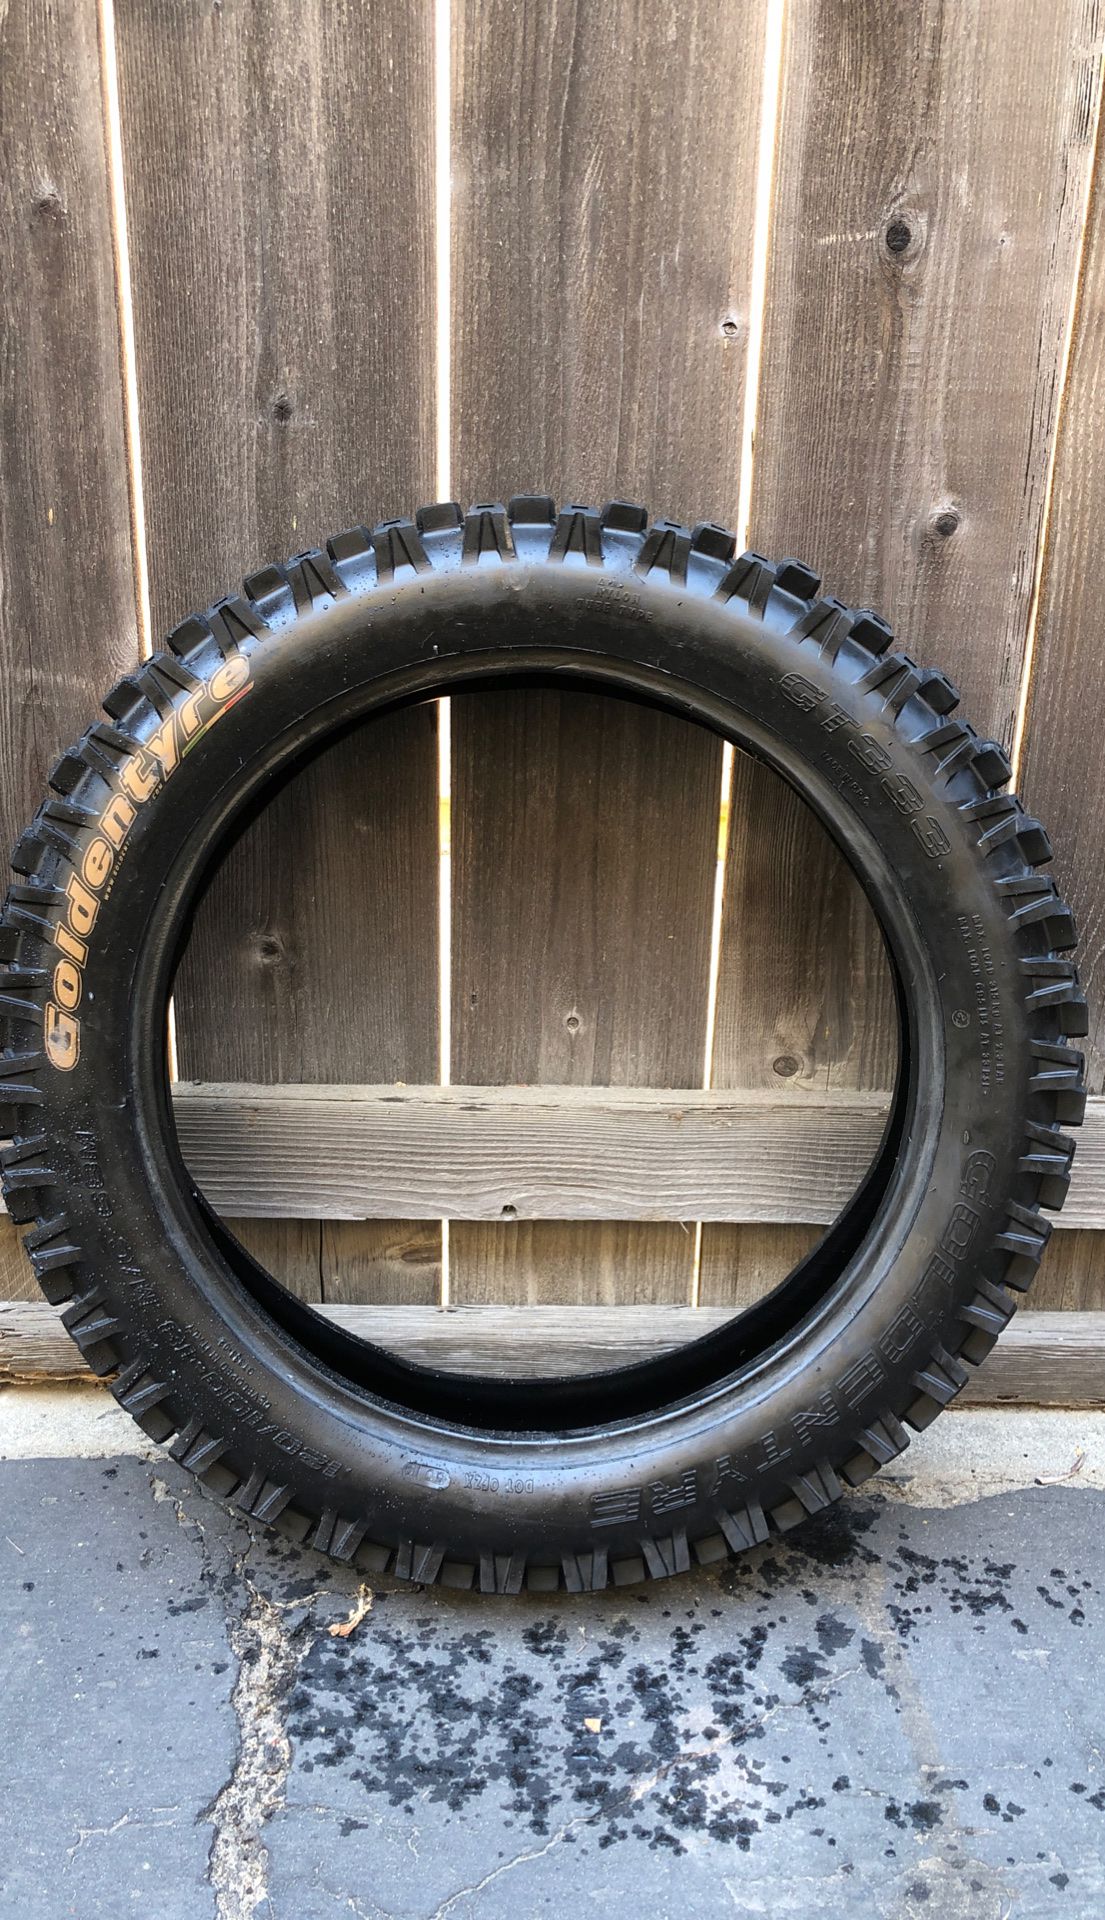 Goldentyre rear dirt bike tire